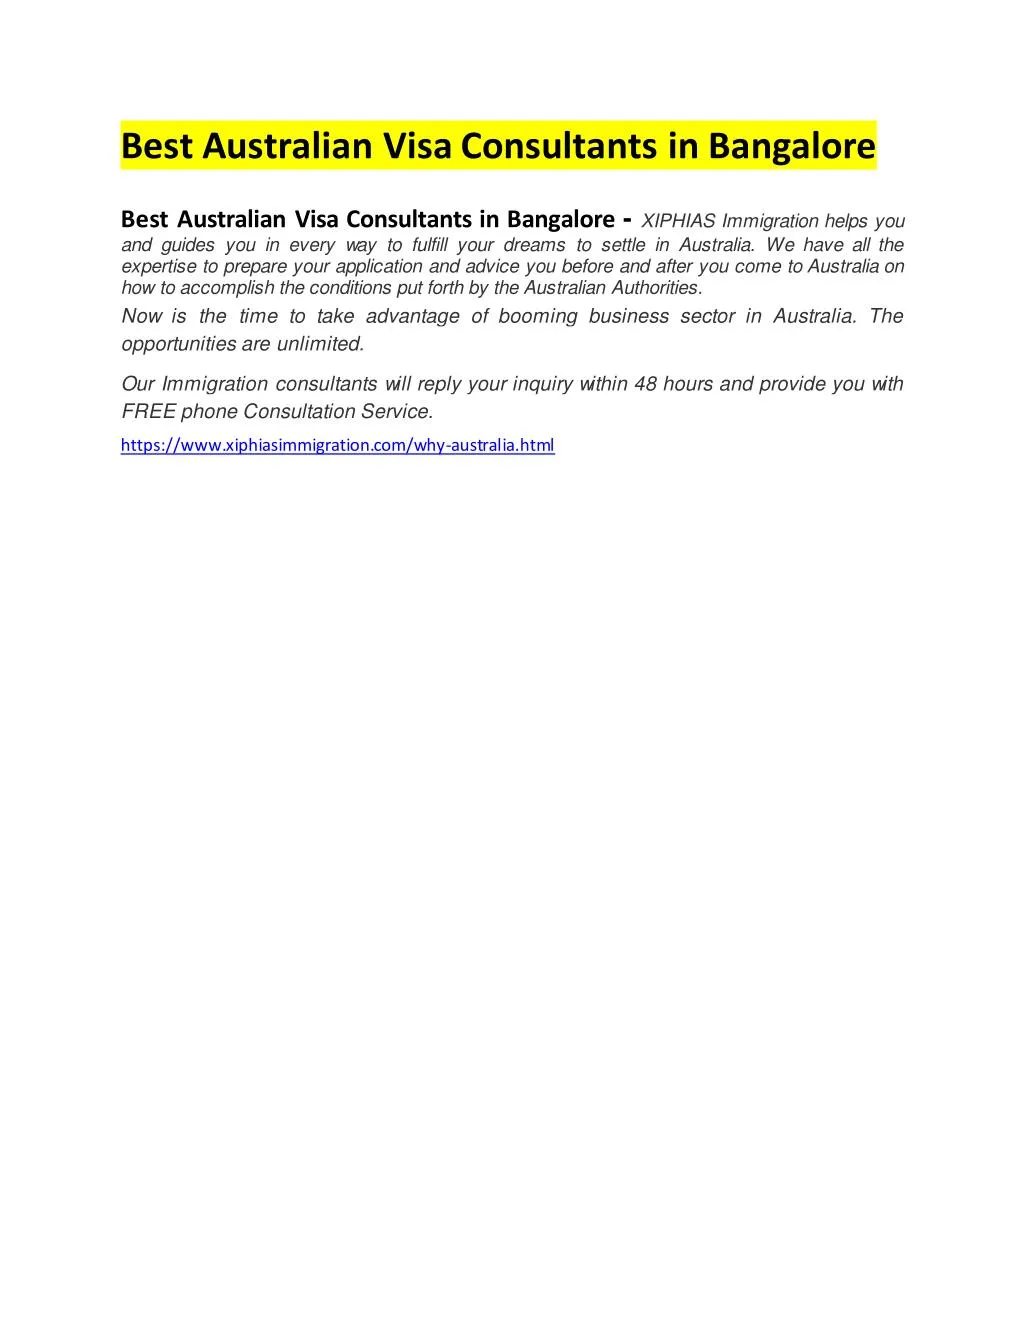 best australian visa consultants in bangalore